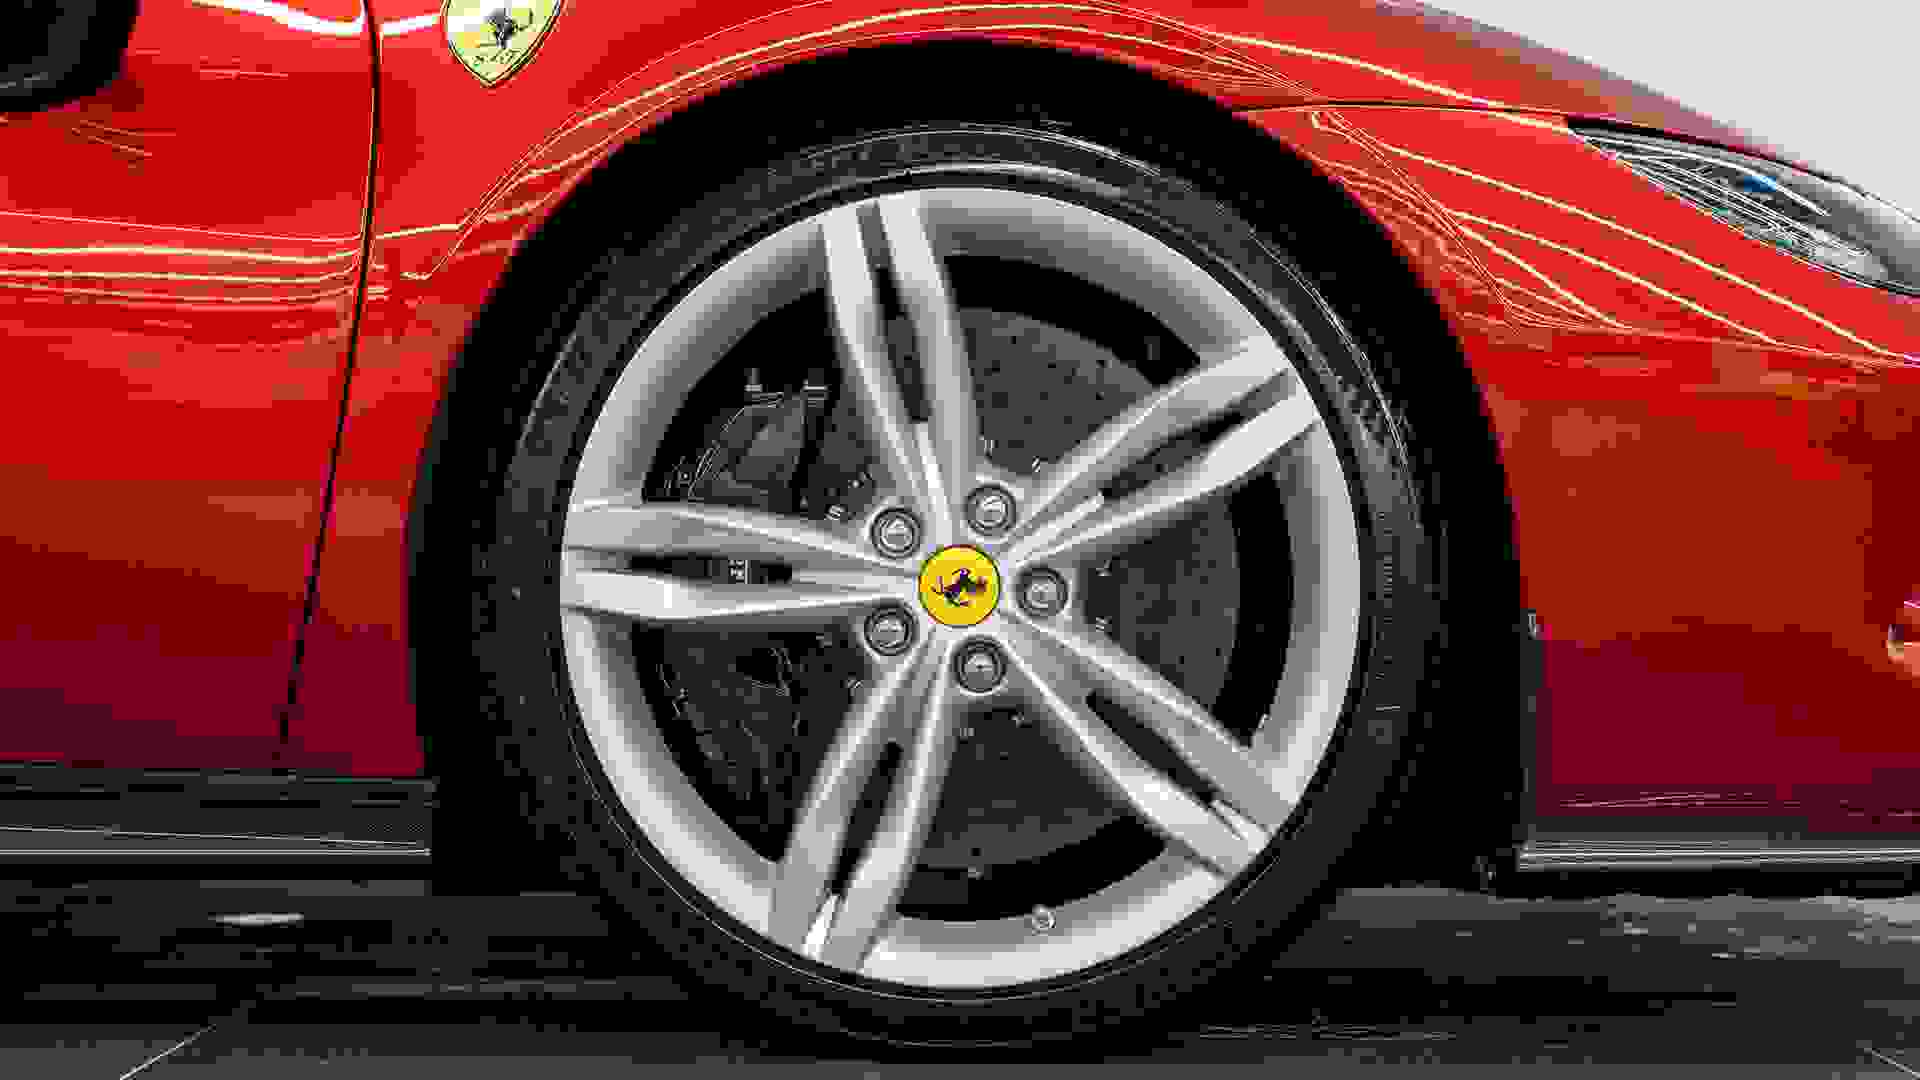 Ferrari 296 Photo fe478542-84ee-4f36-b05c-de6b1e671c49.jpg